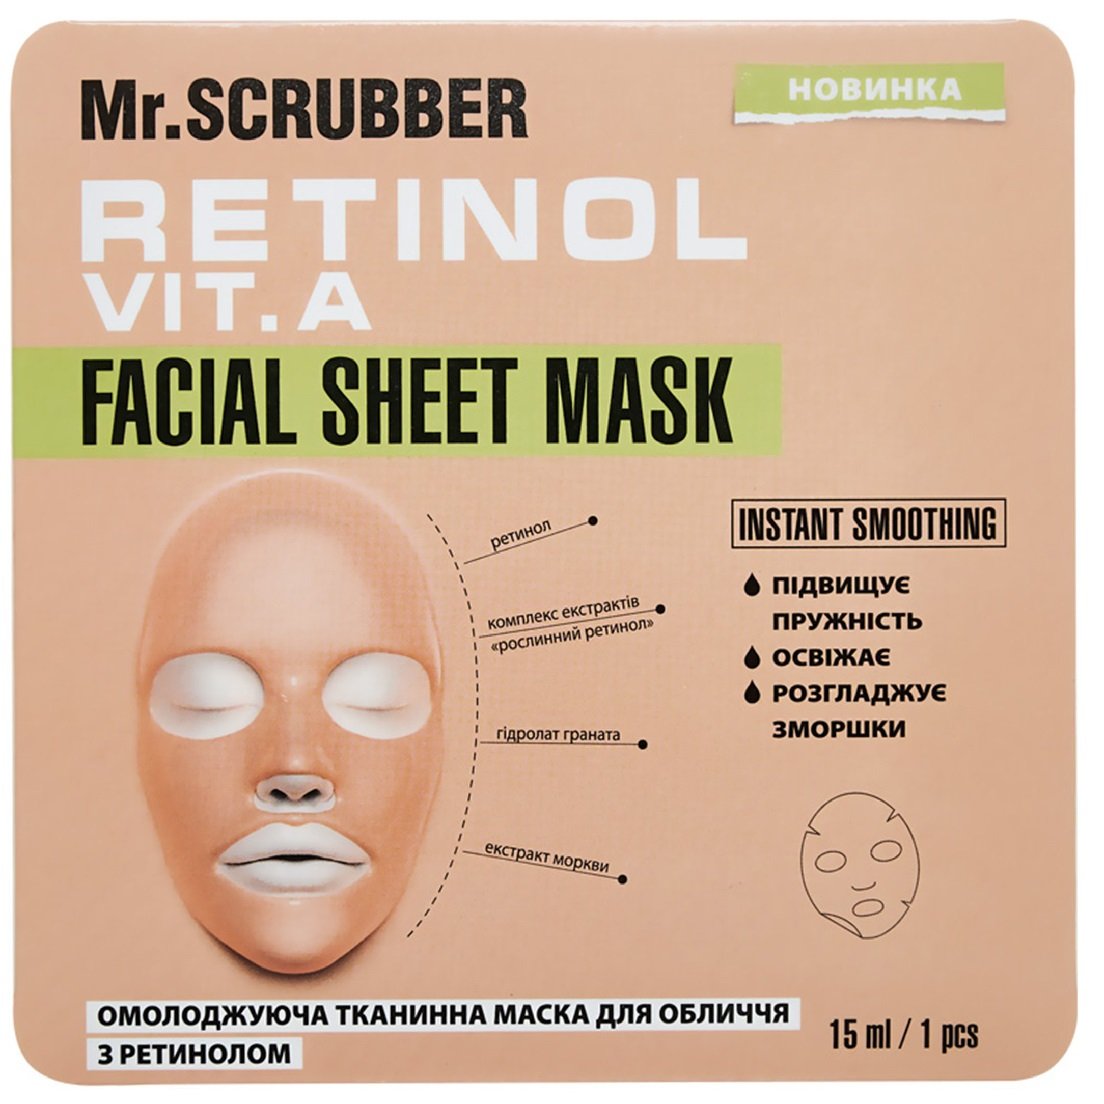 Омолоджуюча маска для обличчя Mr.Scrubber Retinol Facial Sheet Mask, з ретинолом, 15 мл - фото 1